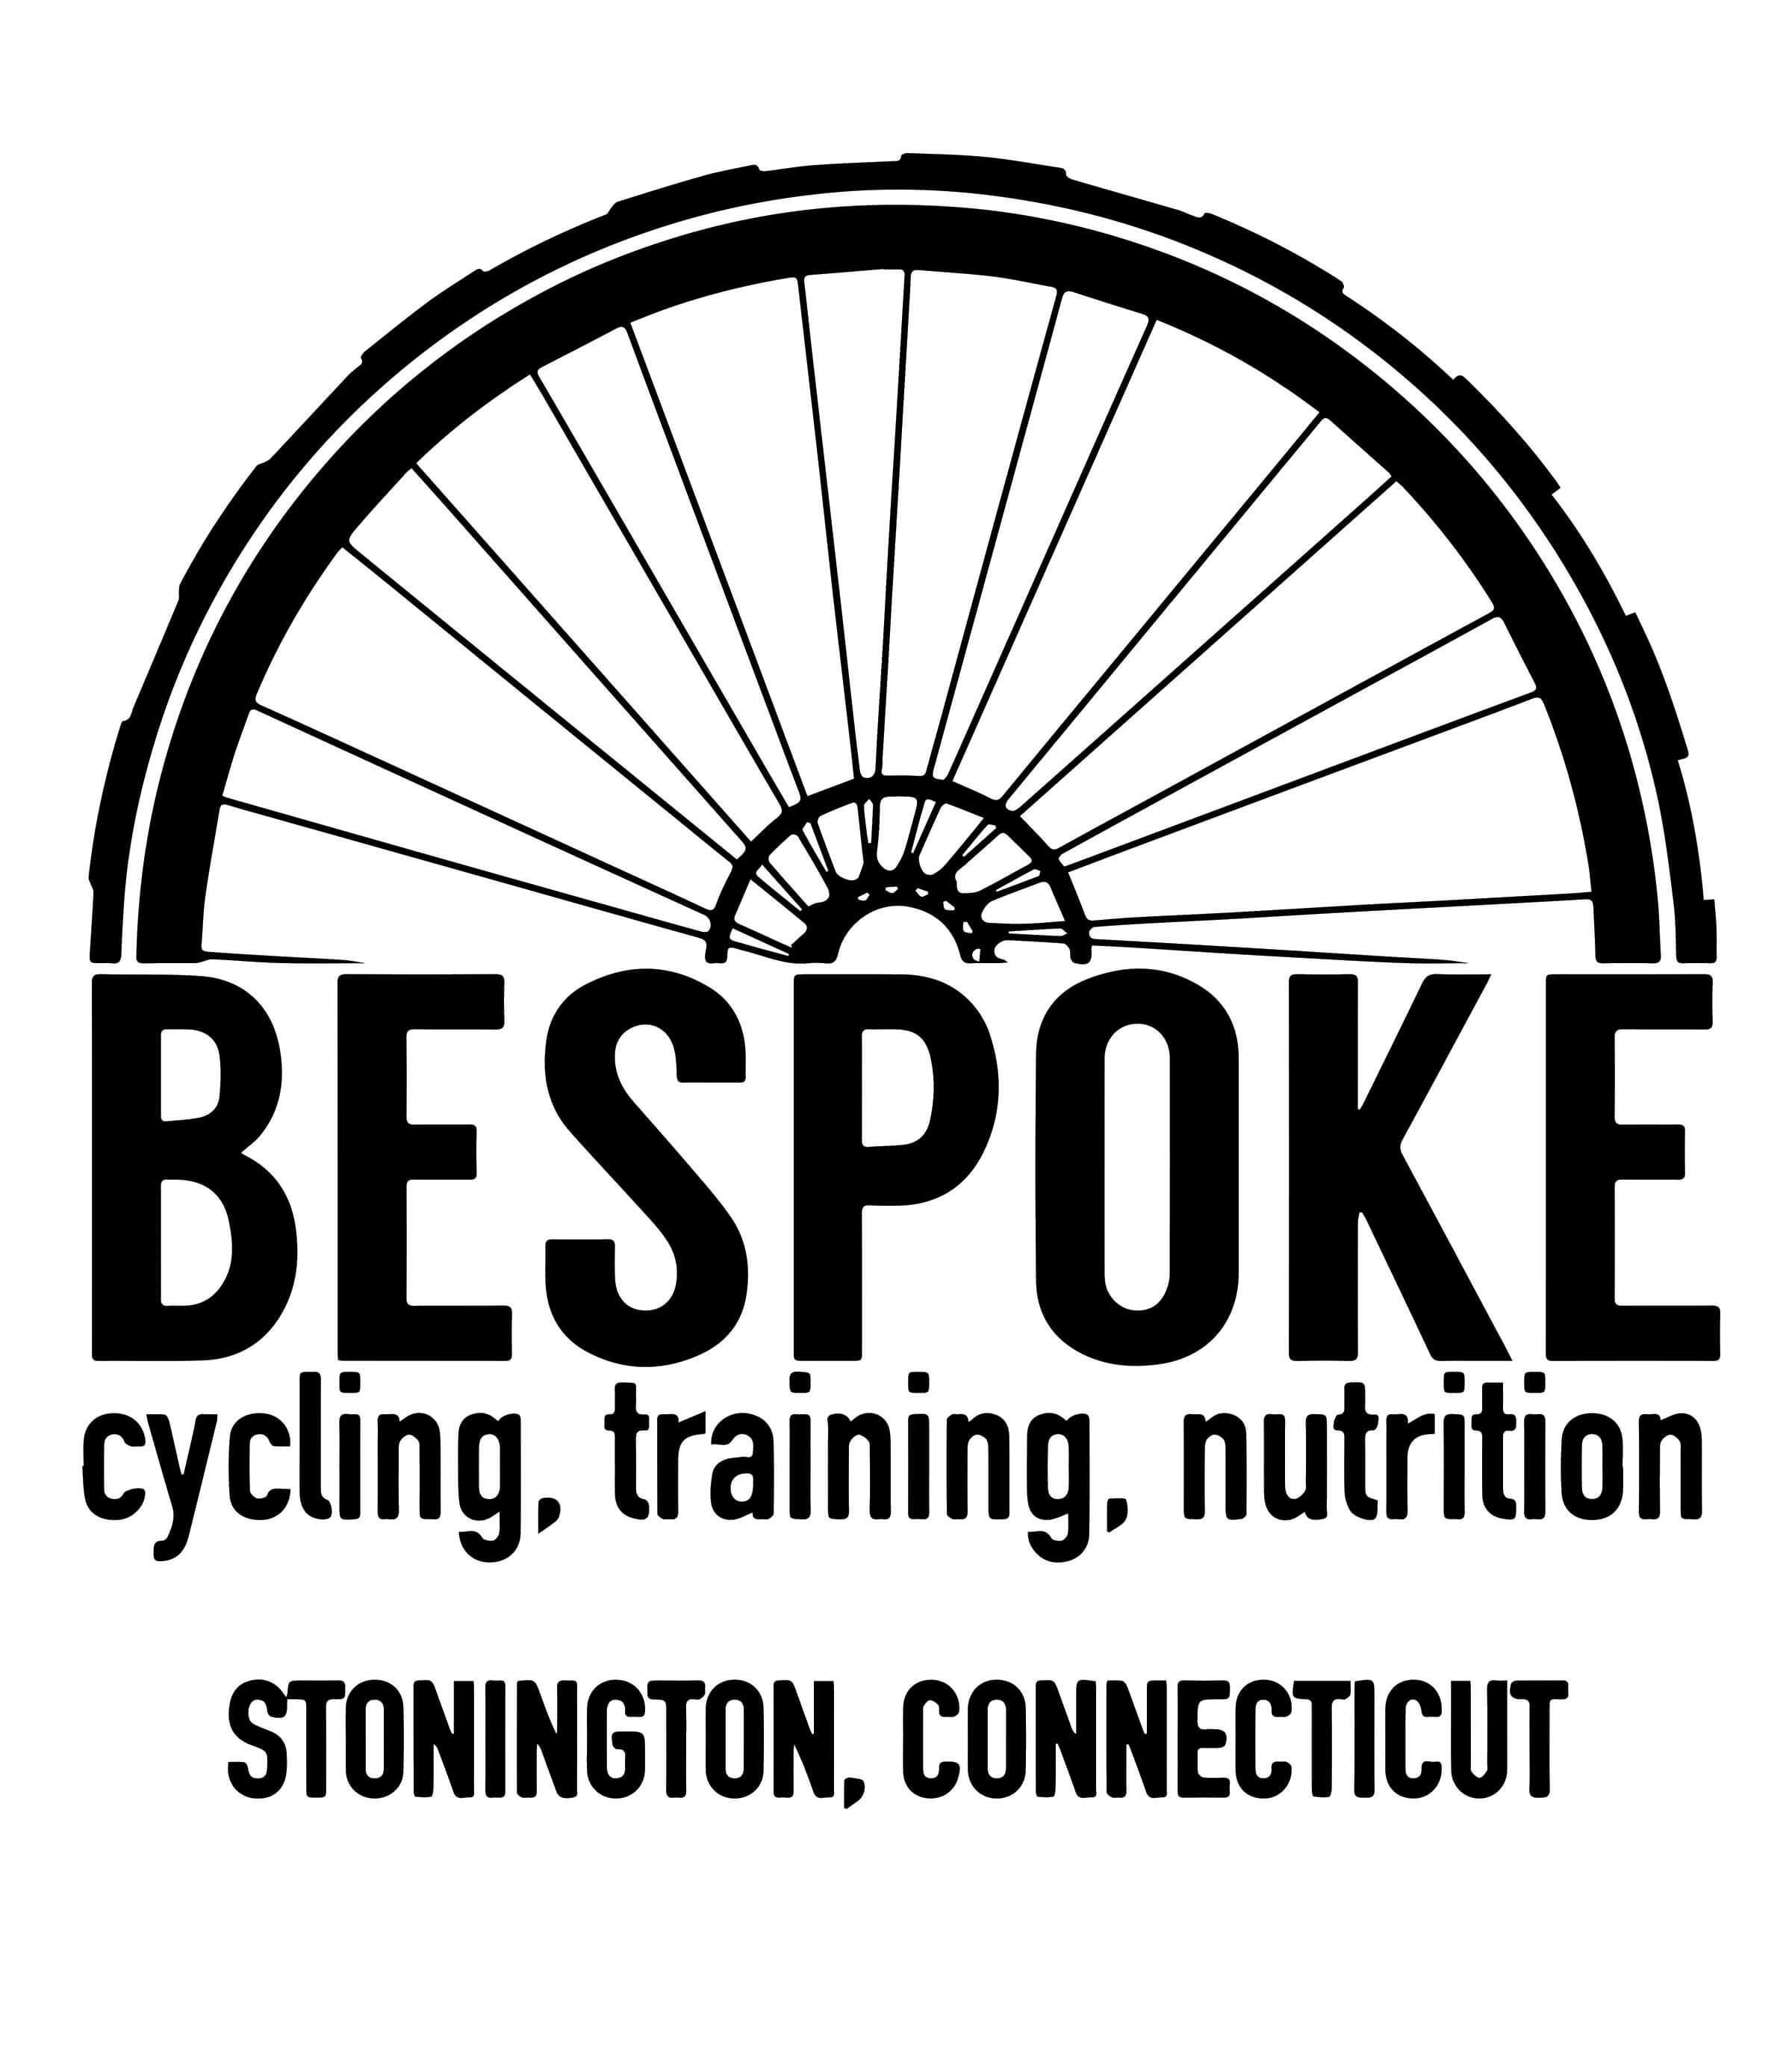 BESPOKE logo vectorized